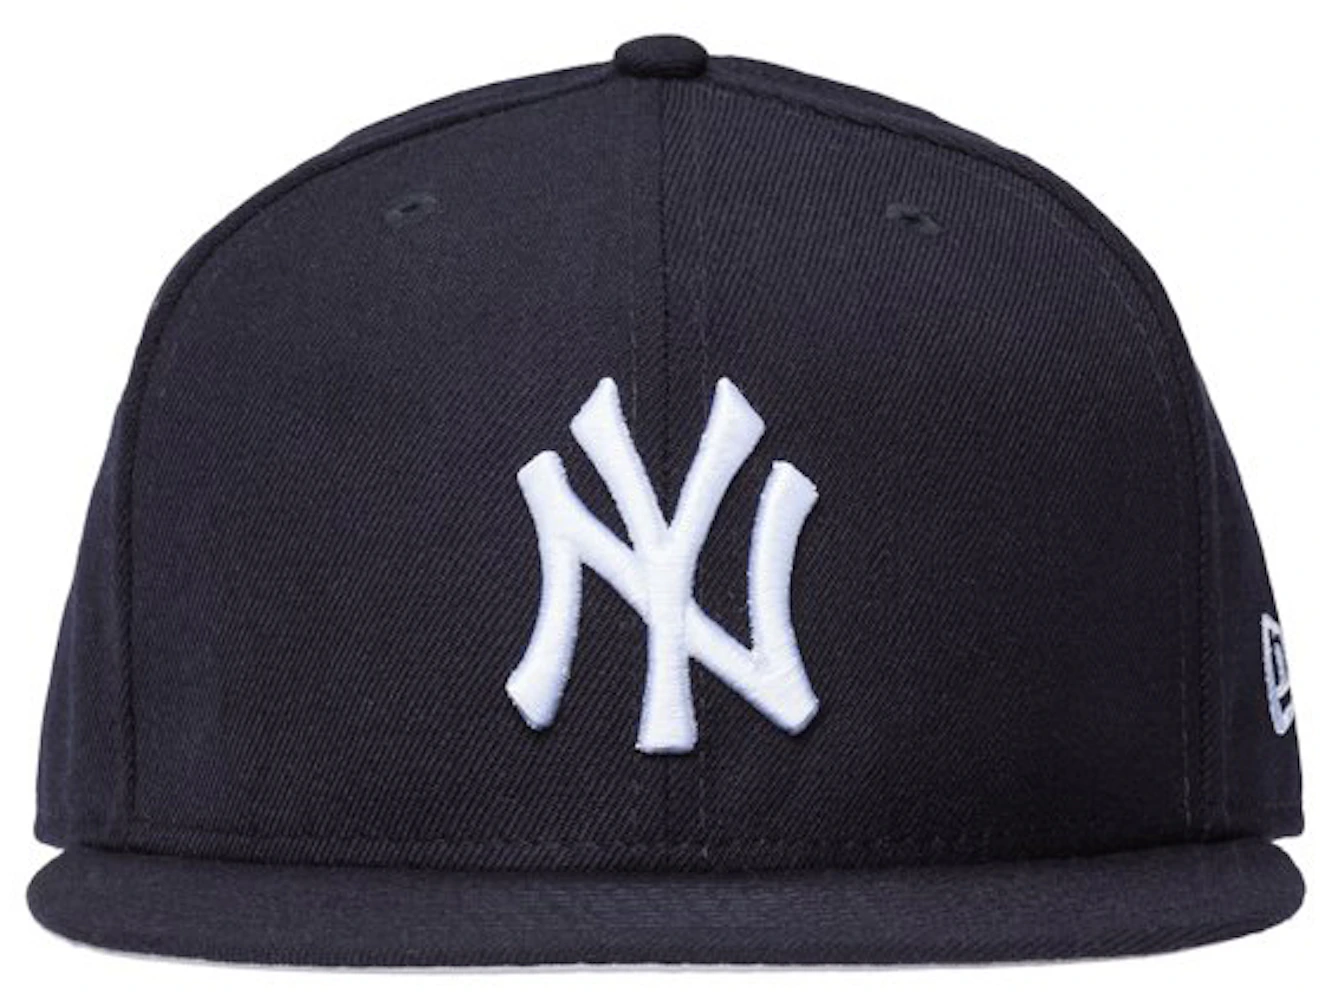 History of Yankees Cap - New Era Yankees Cap at MoMA Exhibit